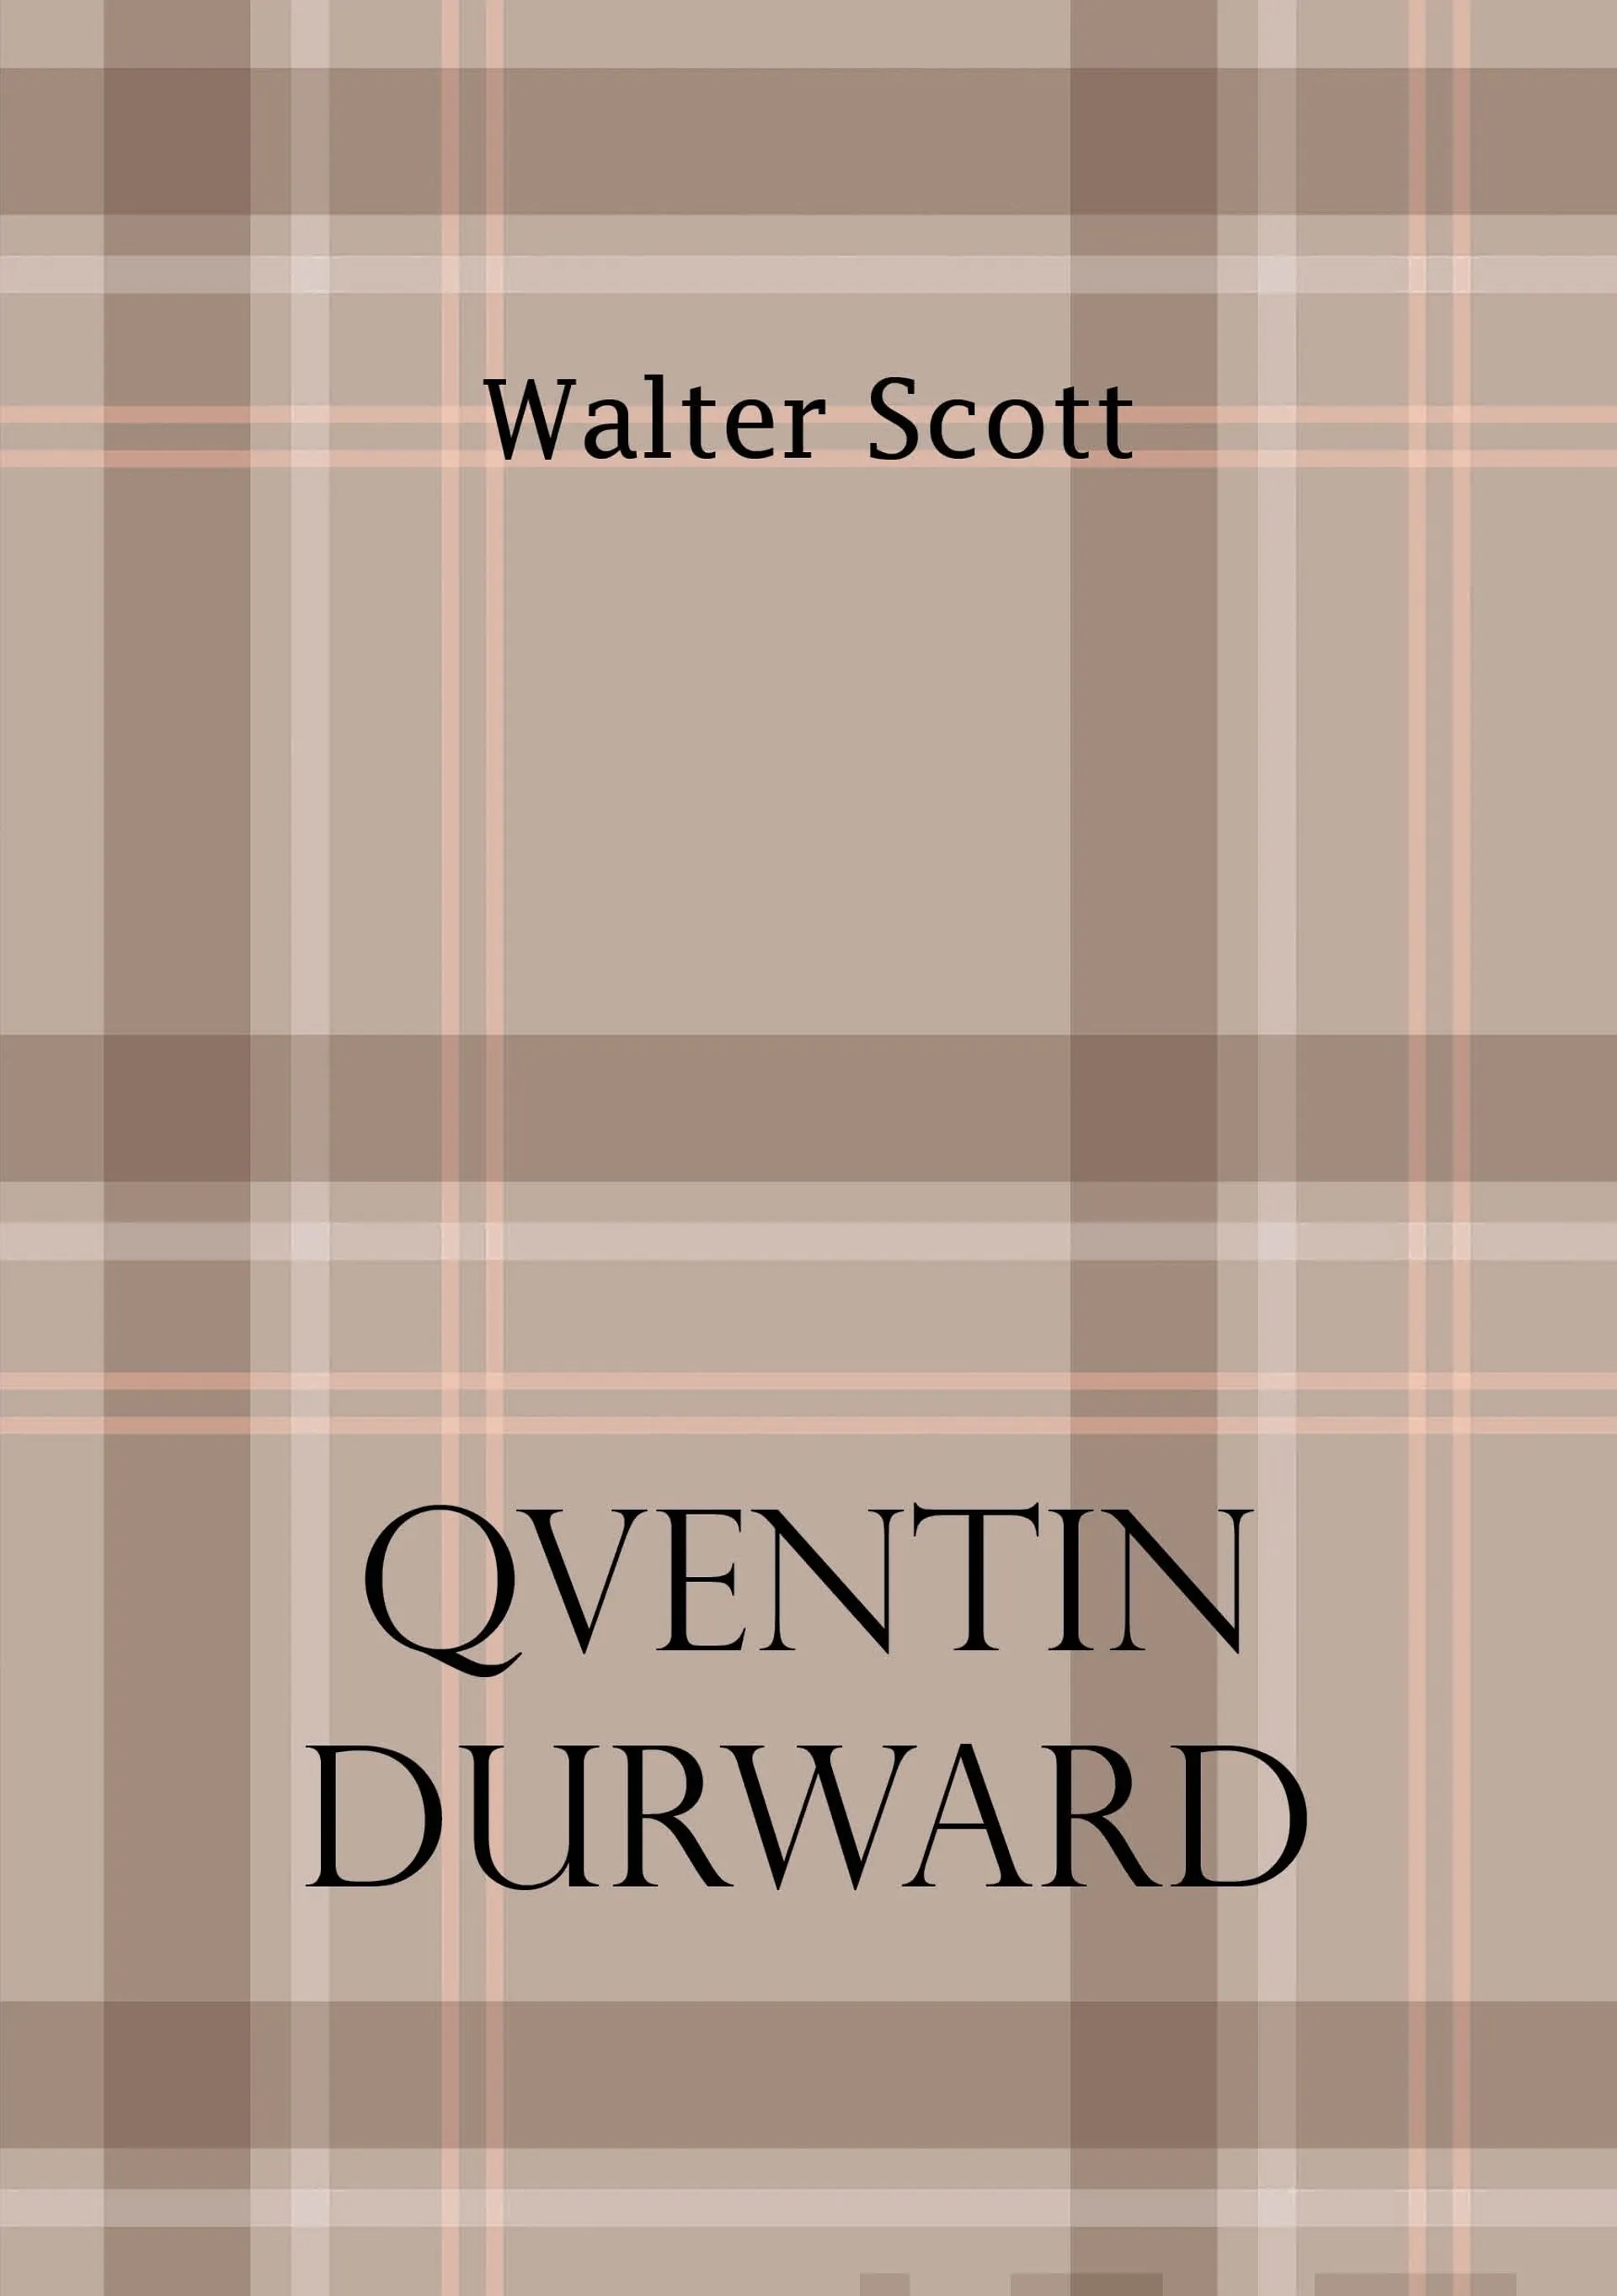 Scott, Qventin Durward